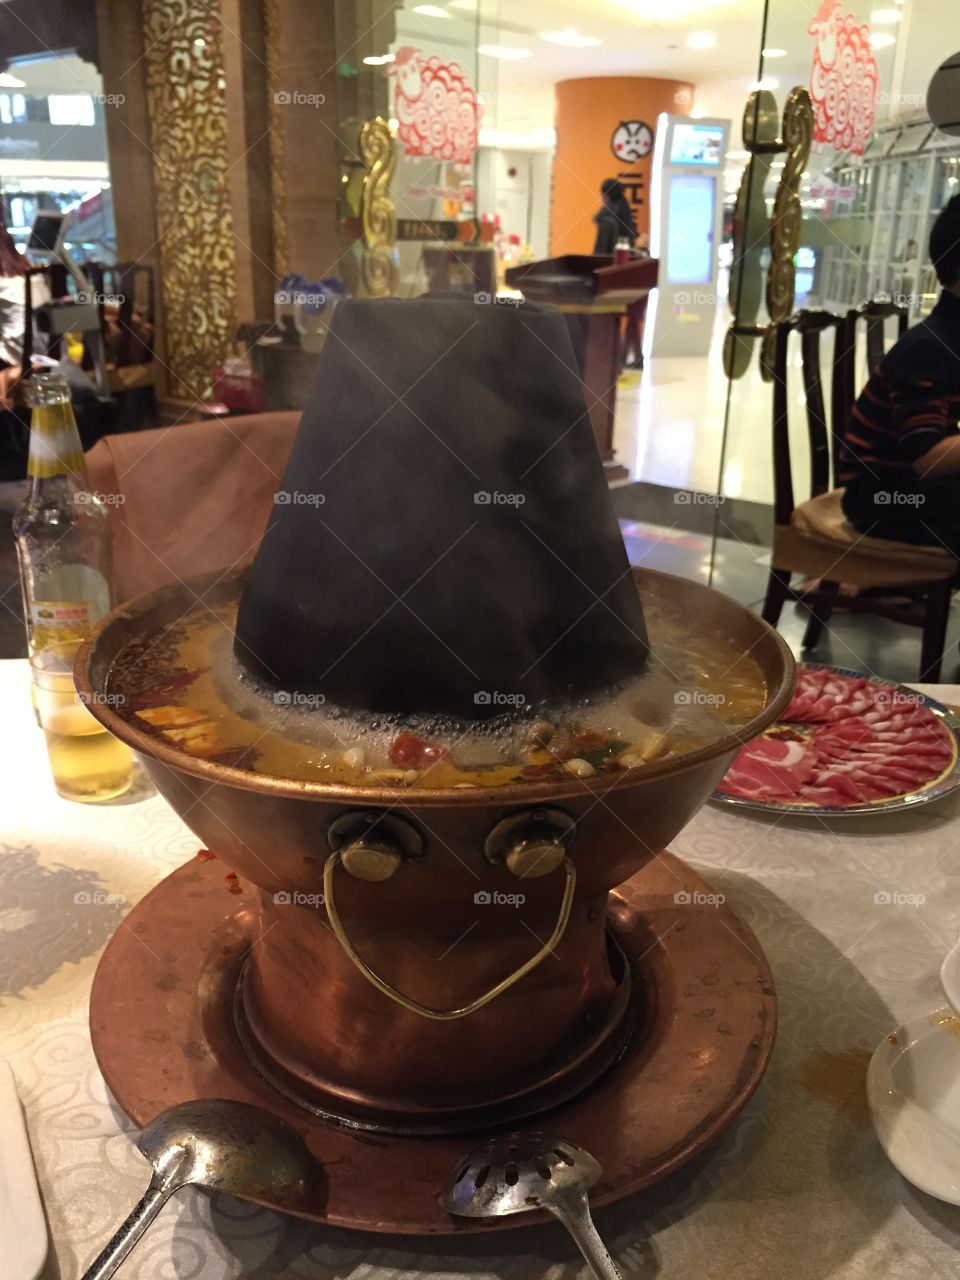 Beijing style hot pot